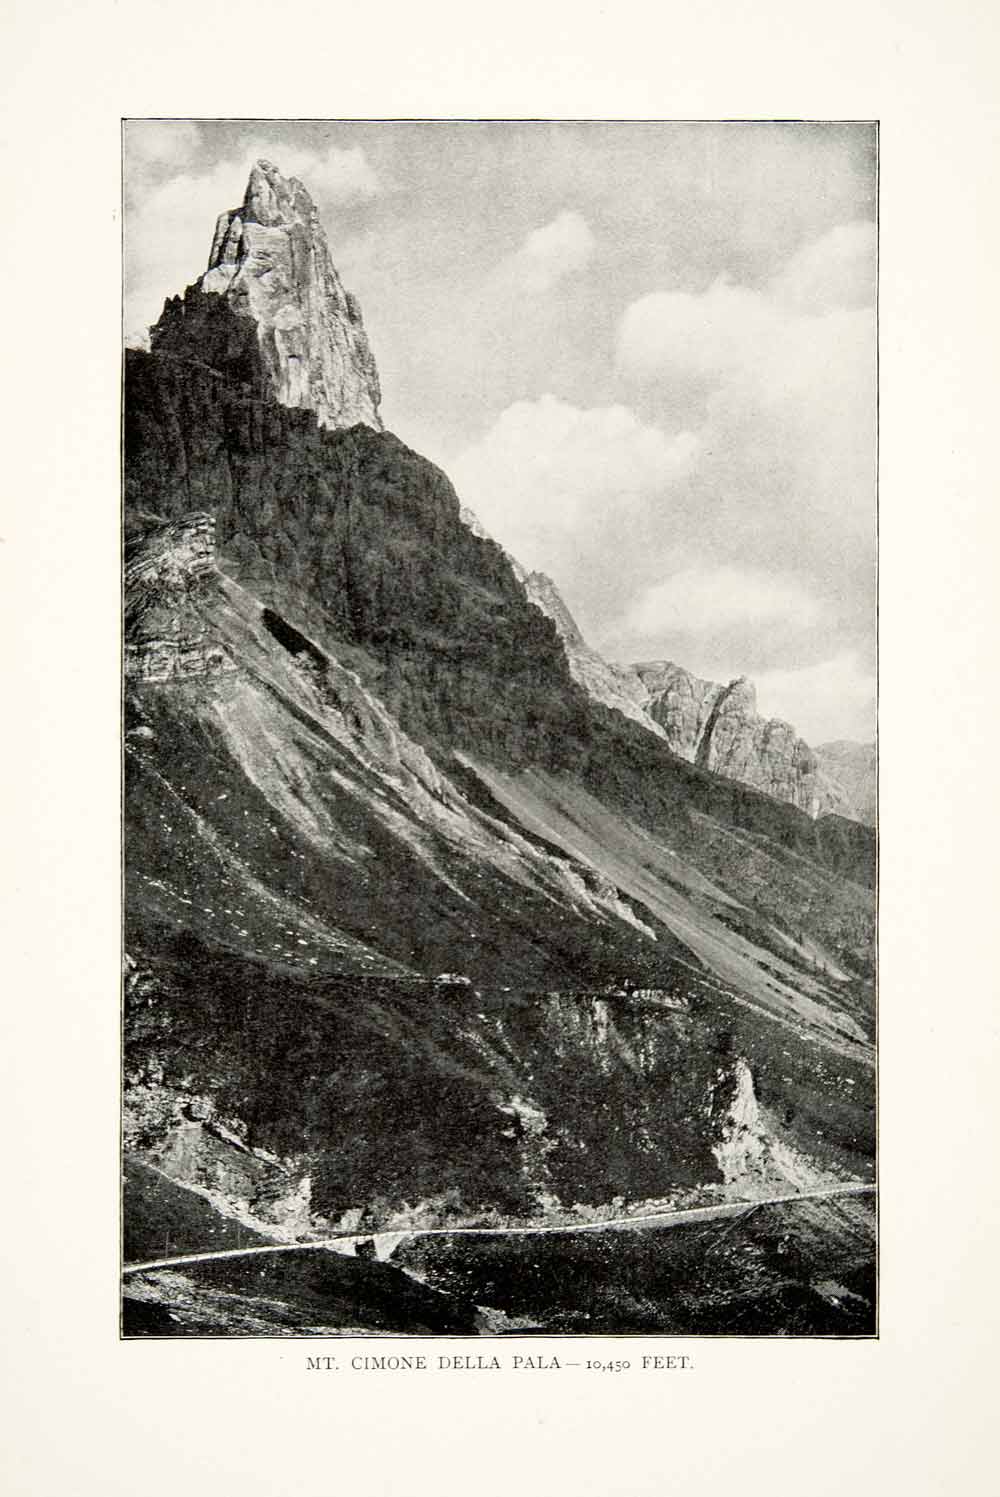 1905 Print Mount Cimone Pala Apennines Italy Rock Formation Mountain XGNB8